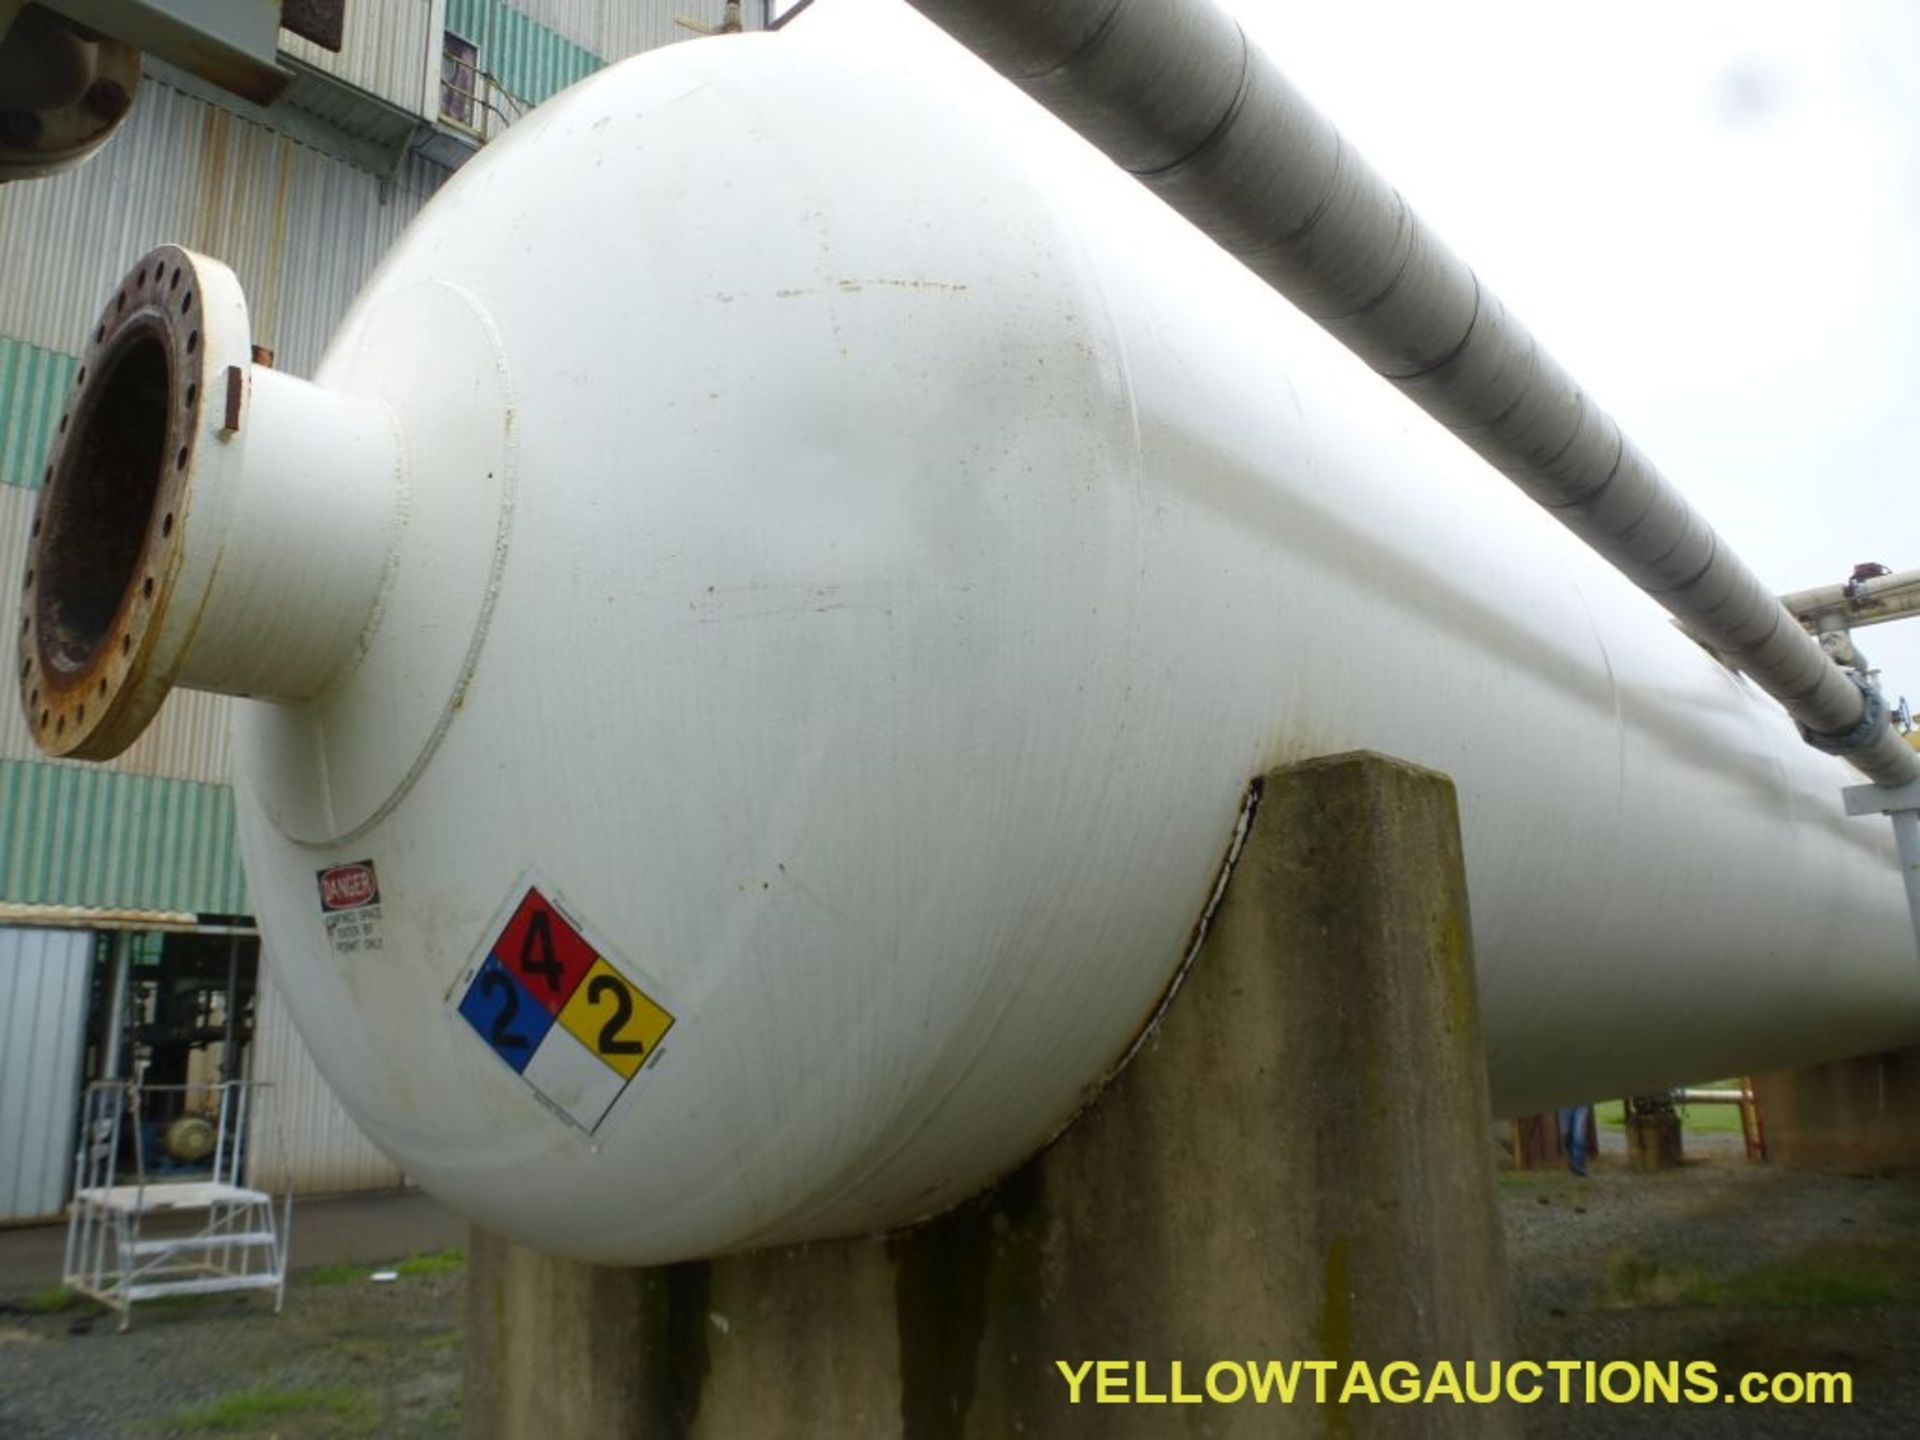 30,000 Gallon Pressure Vessel - 803" Length; PSI: Original 200, Recertified at 125; Includes: 2 - Image 13 of 17